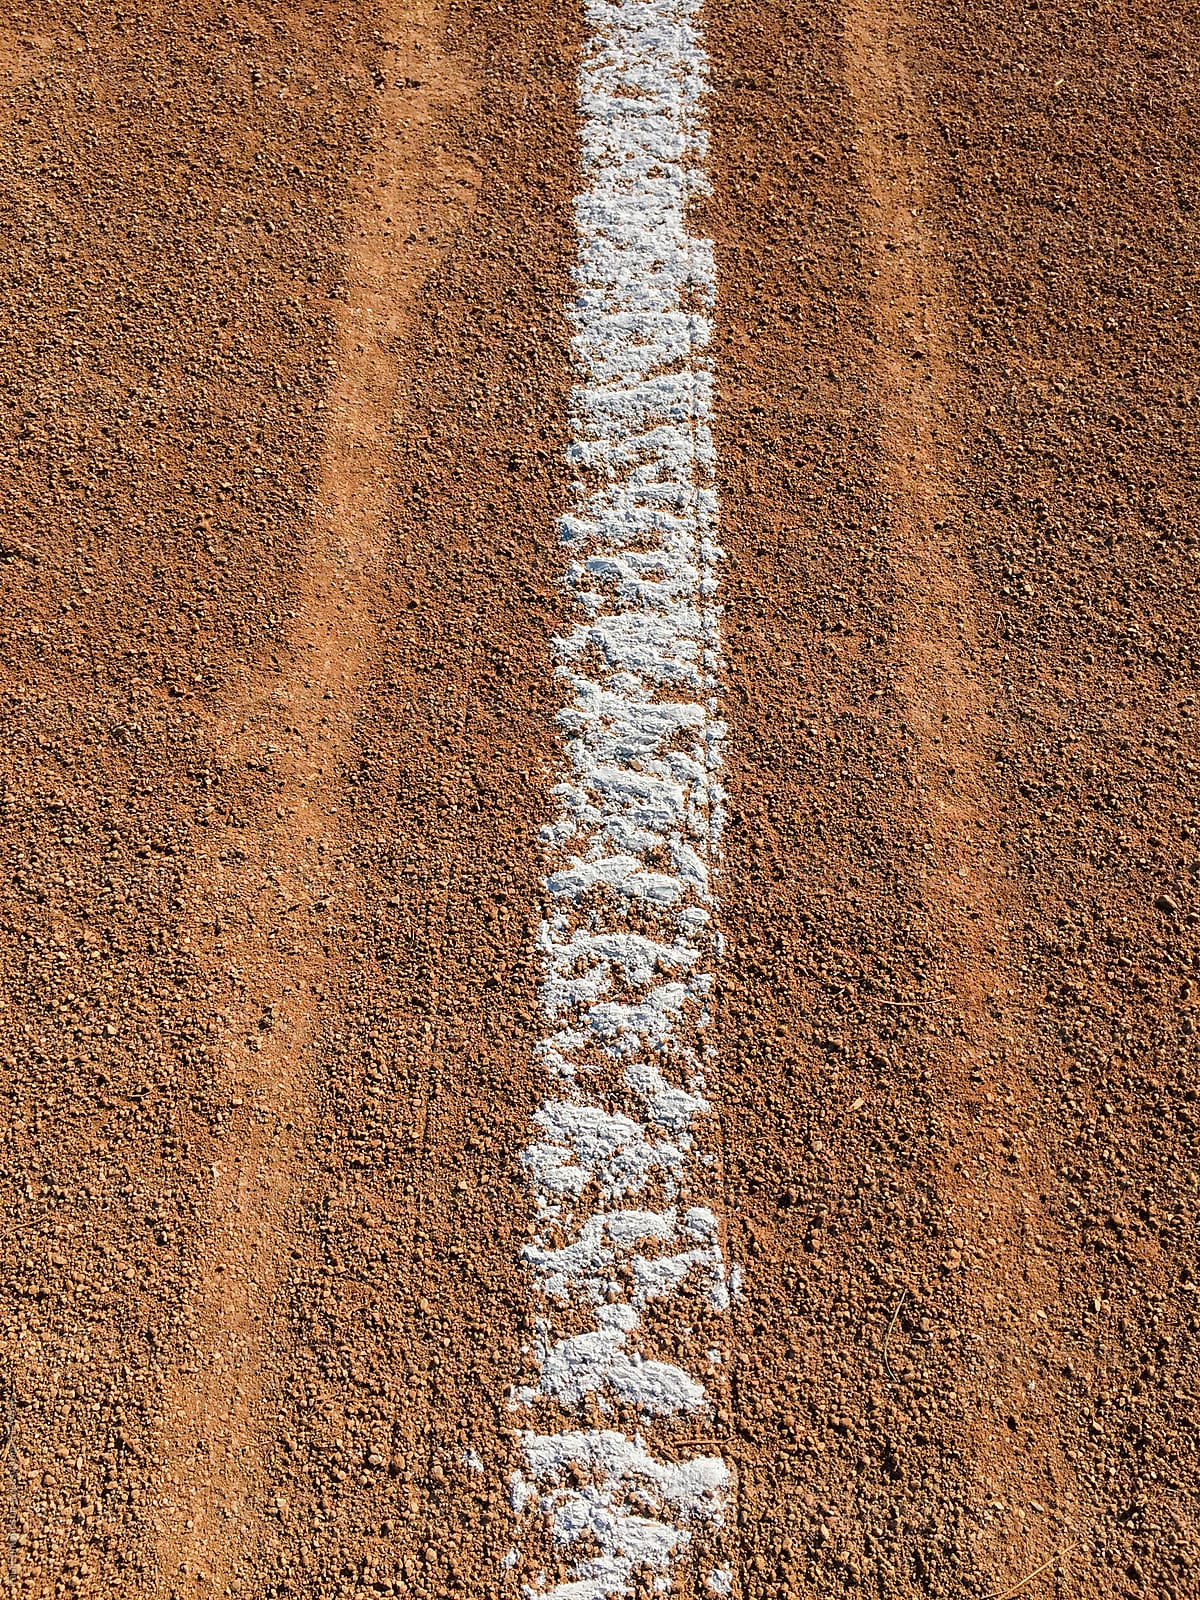 Close up of white boundary marks on baseball field